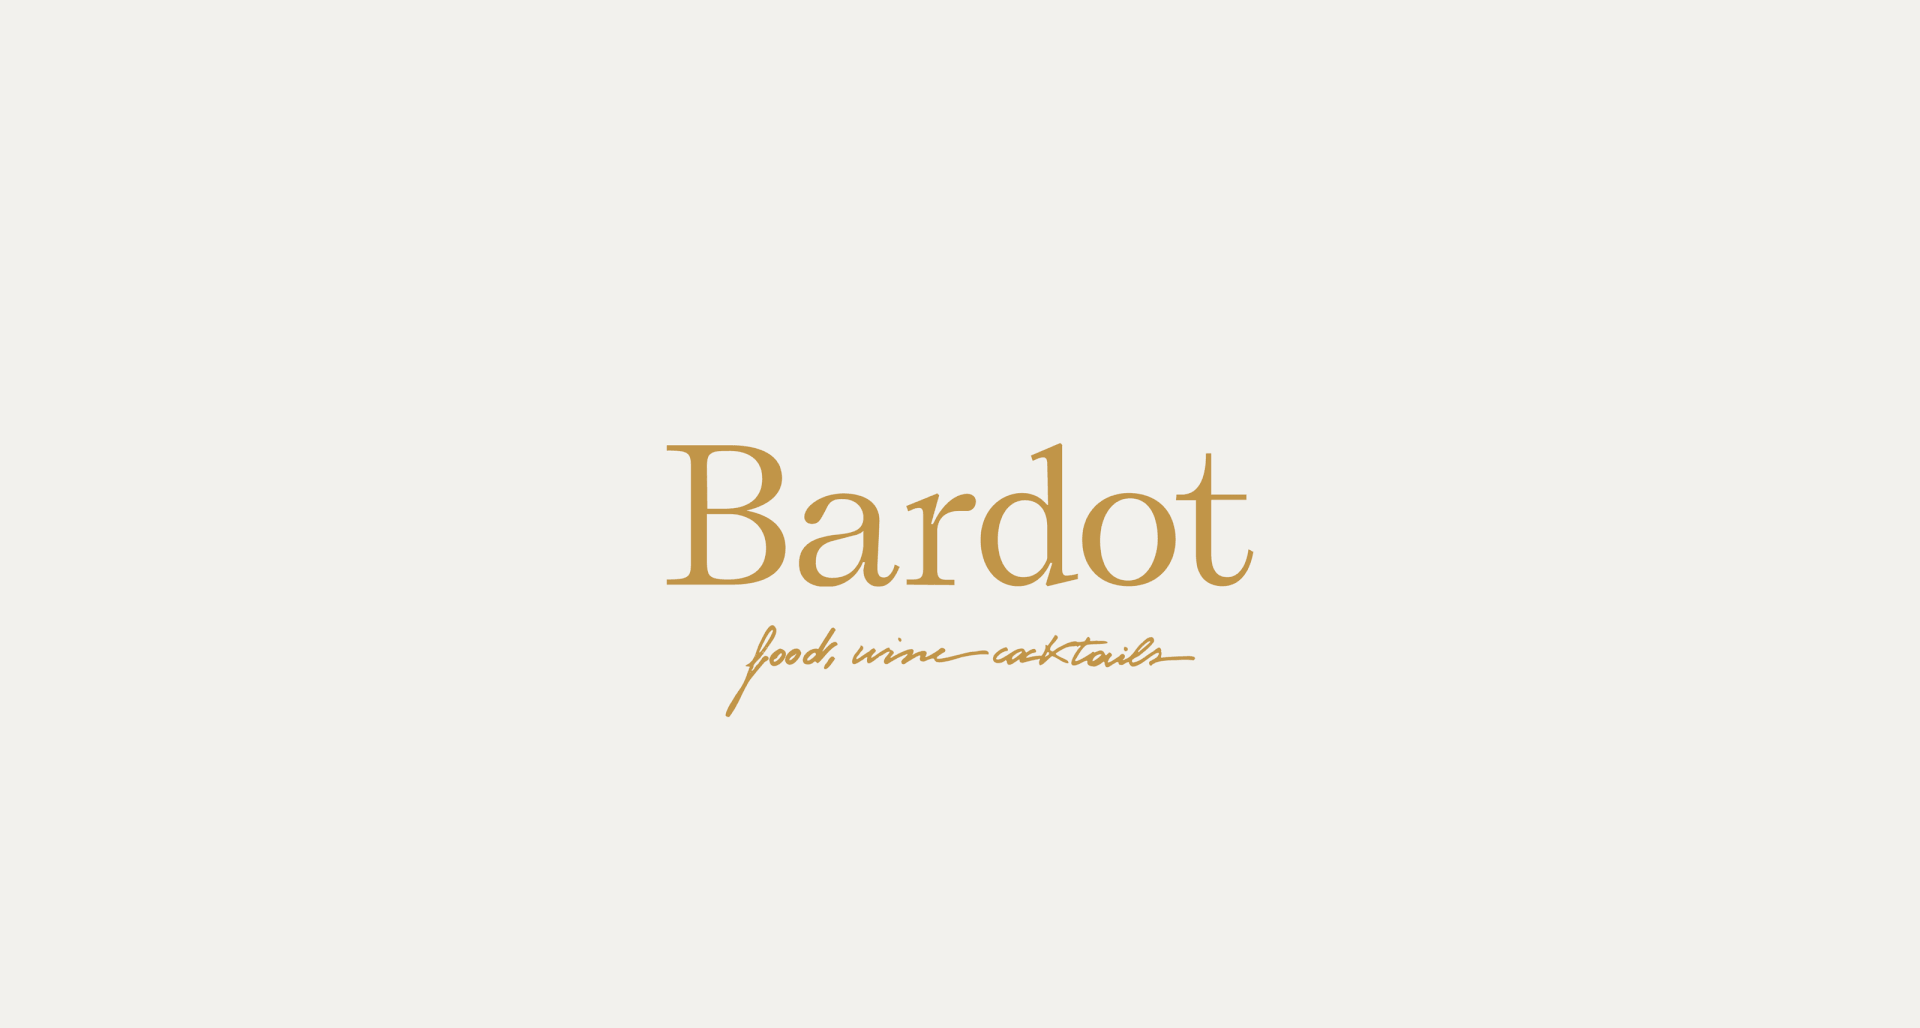 Bardot品牌餐厅全案设计